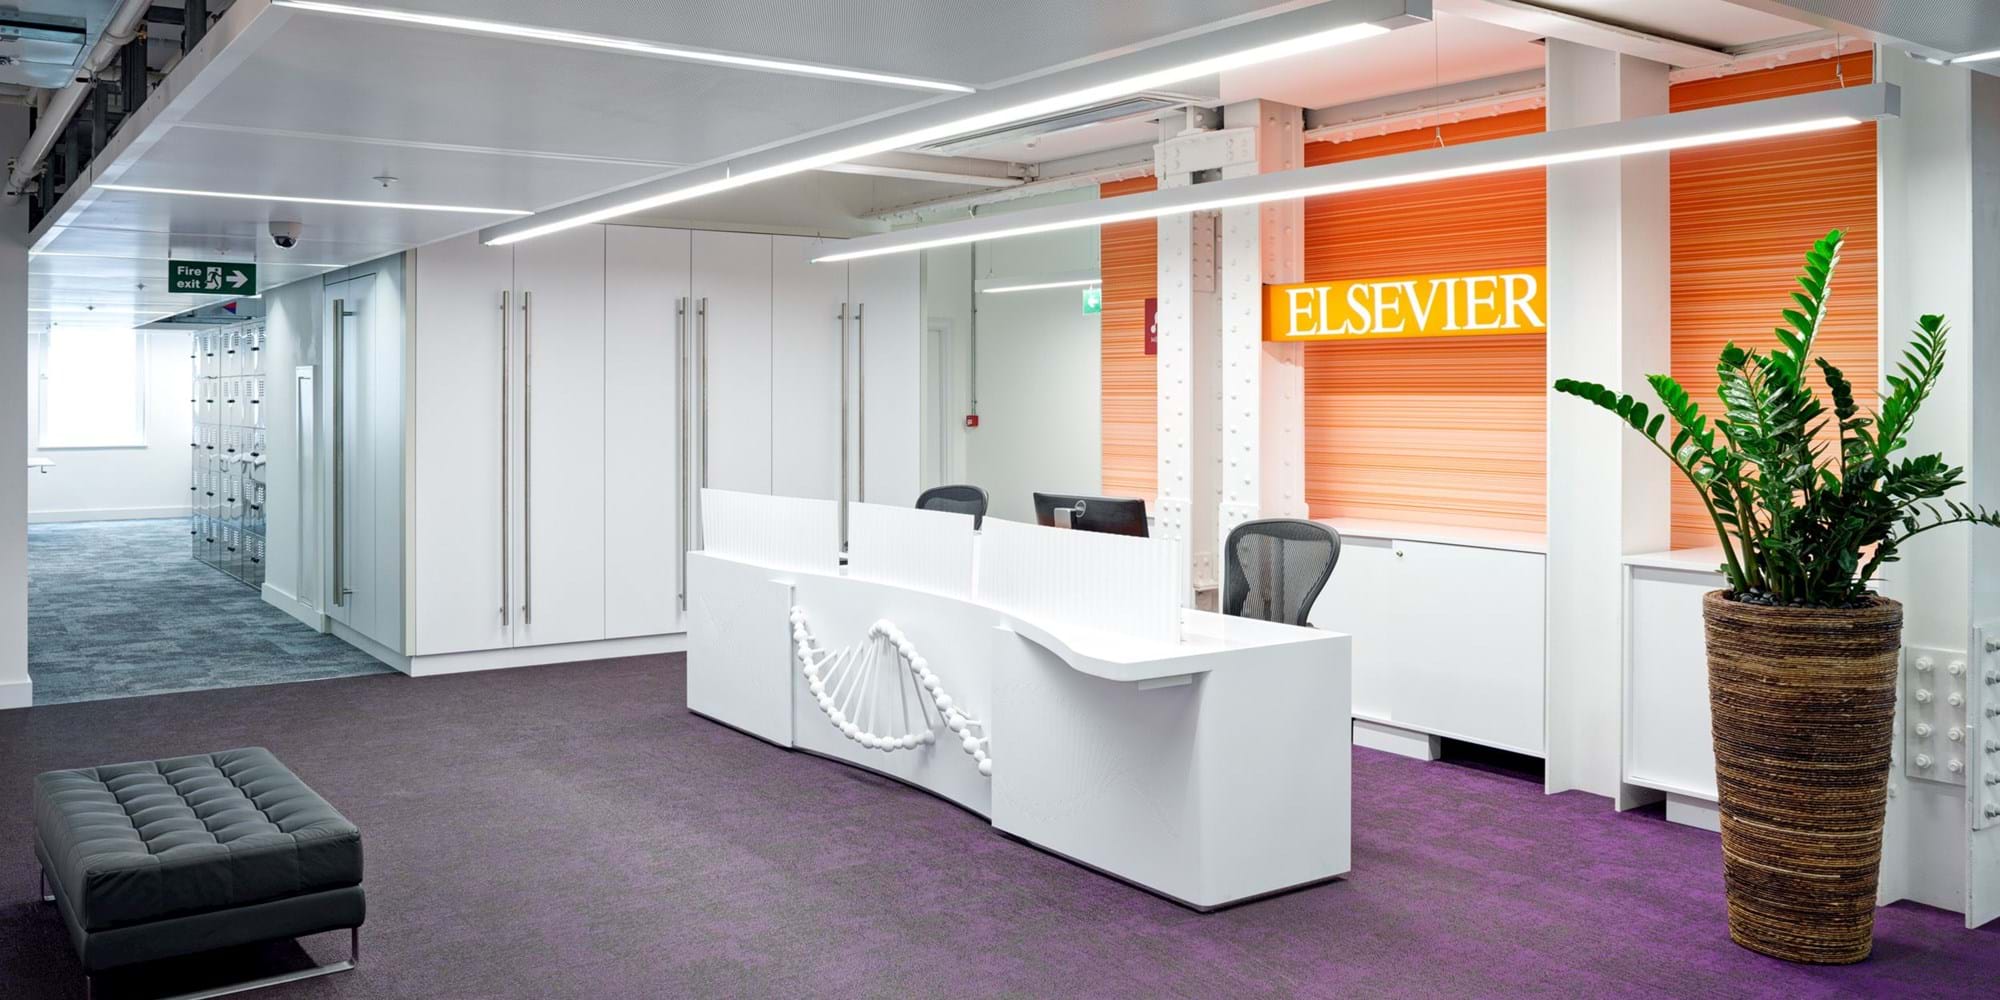 Modus Workspace office design, fit out and refurbishment - Mendeley - Mendeley 01 highres sRGB.jpg